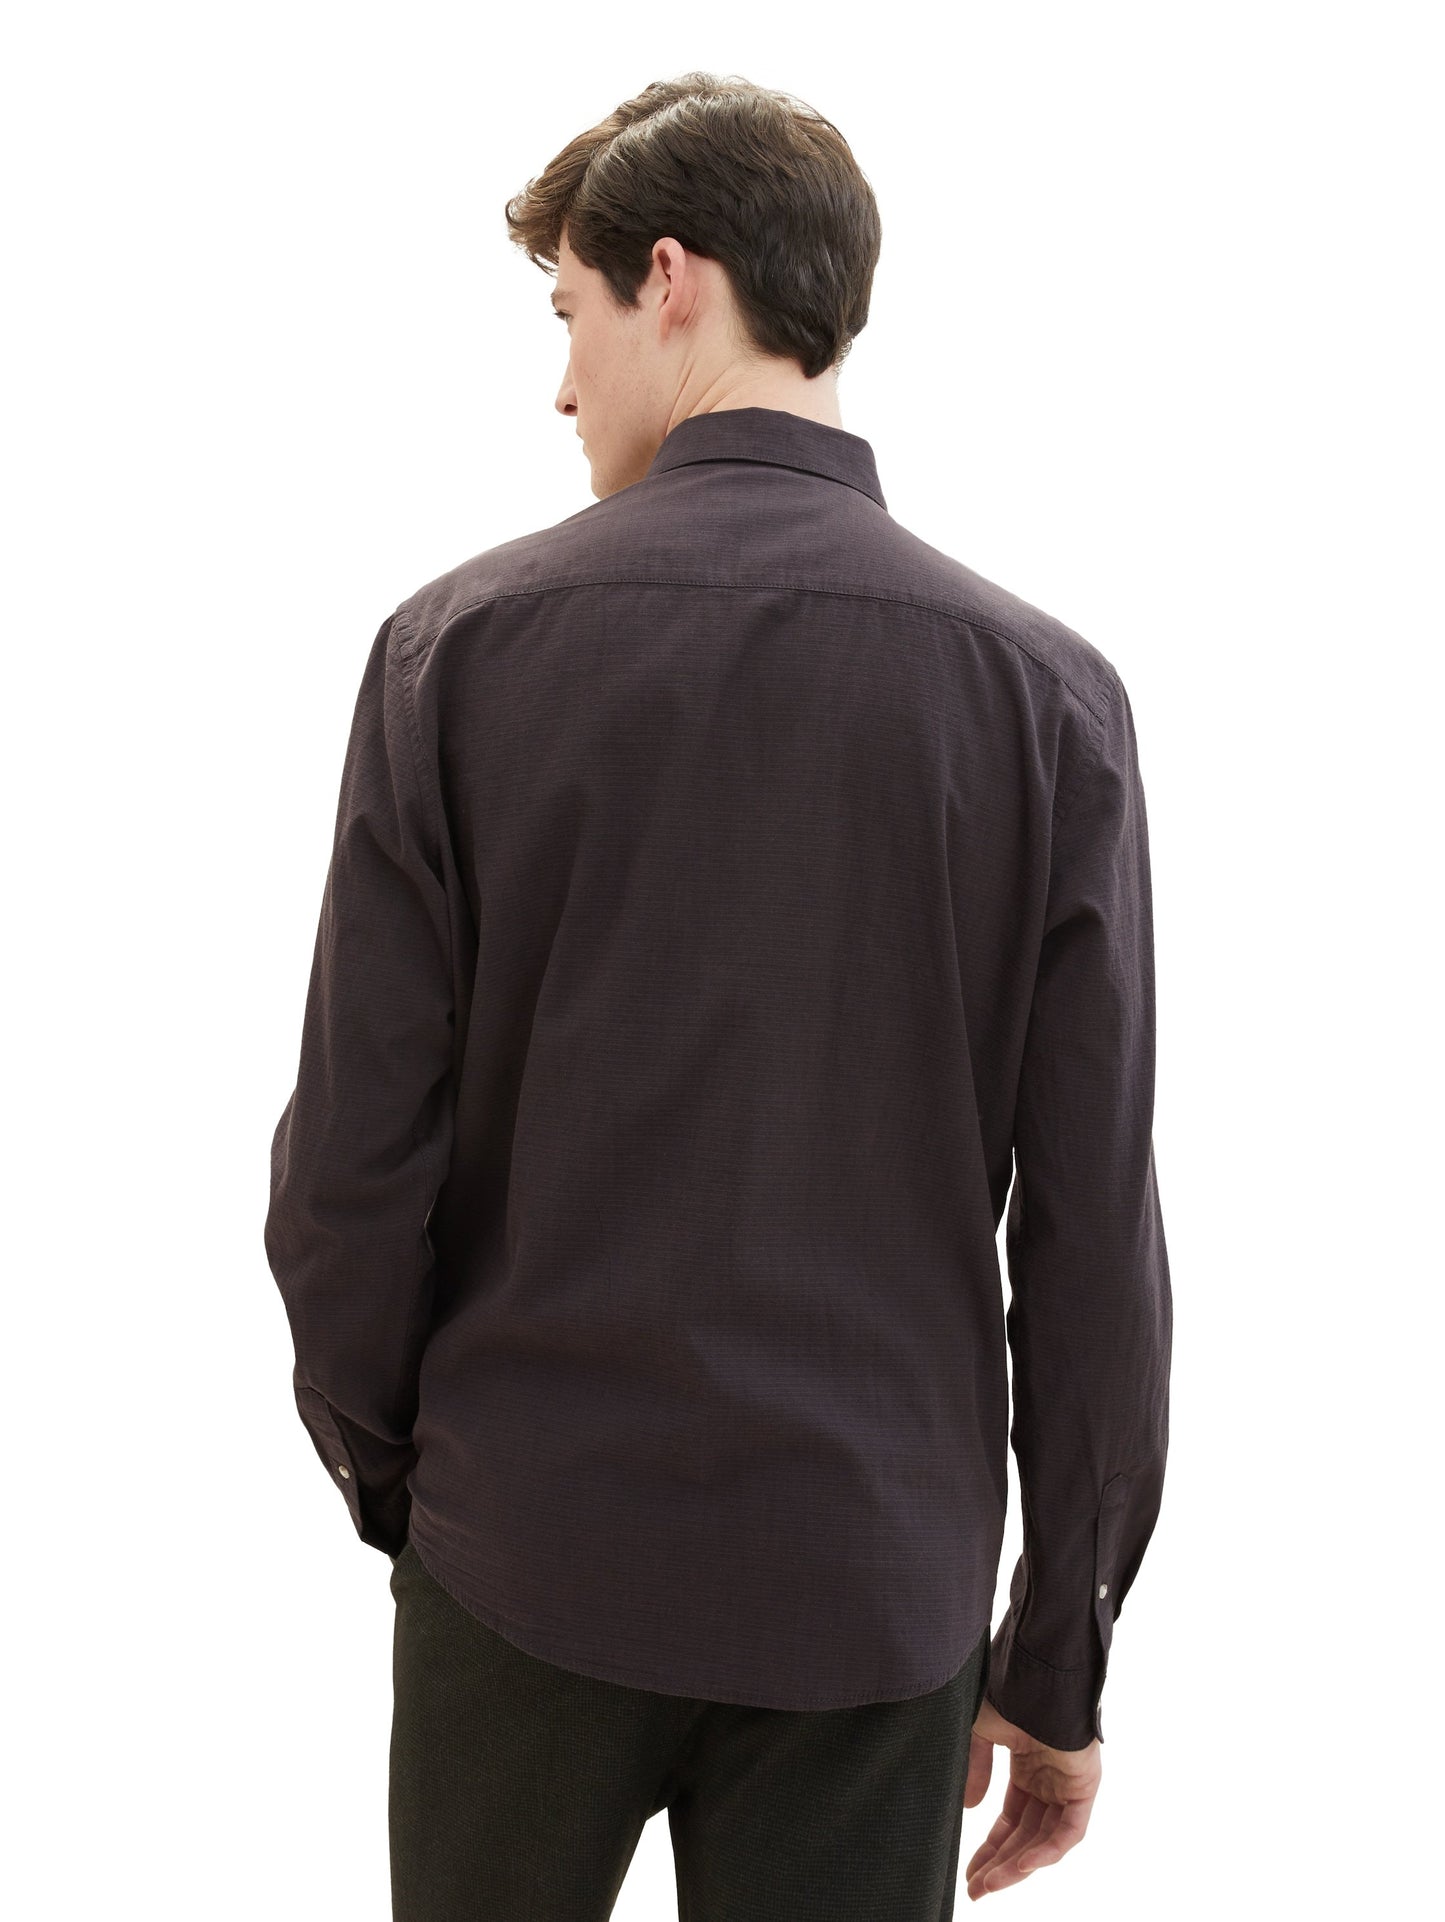 structured shirt (Black Herringb)